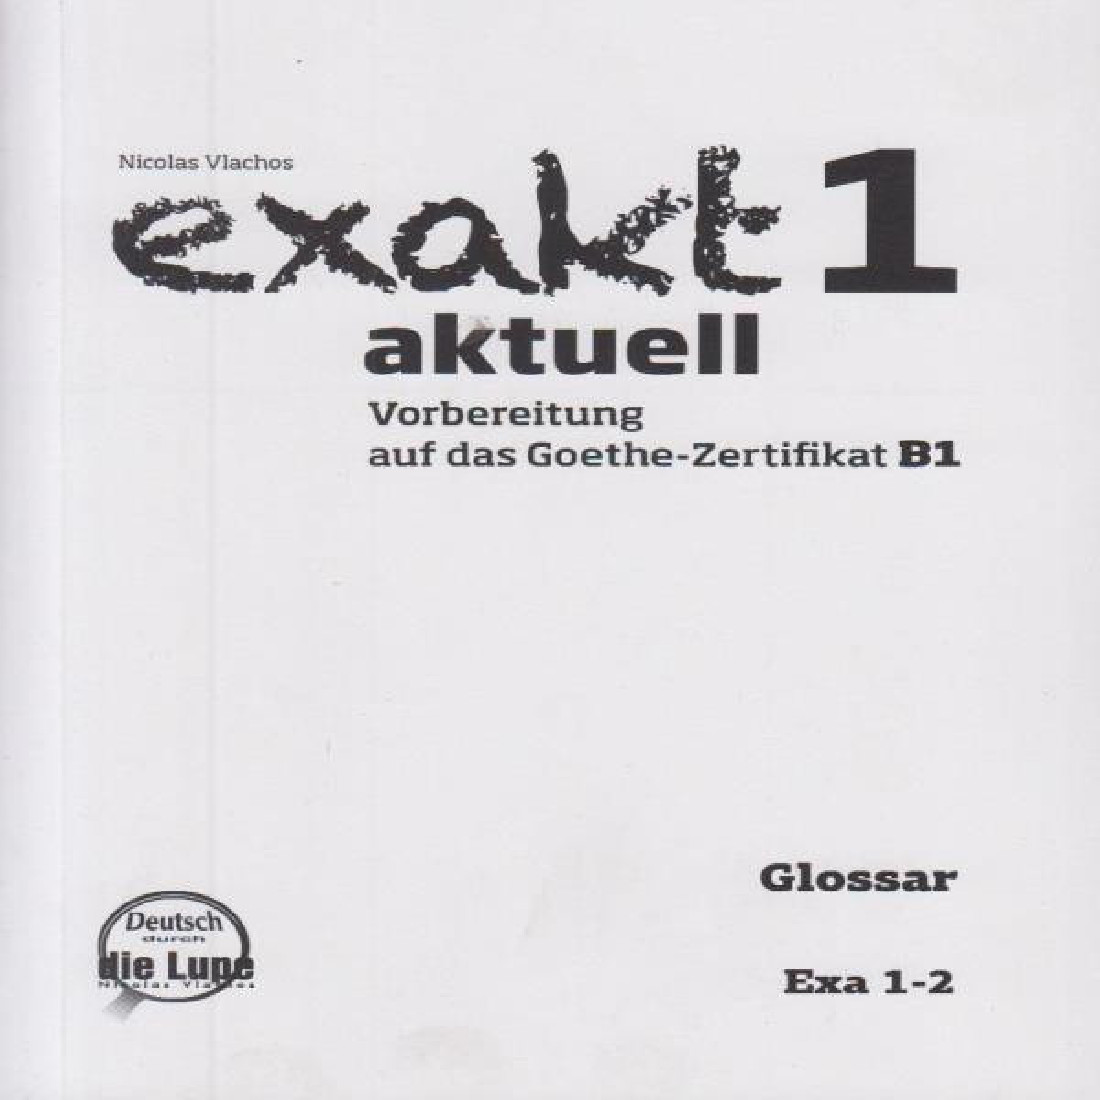 EXAKT AKTUELL 1 (LESEN) GLOSSAR 2013